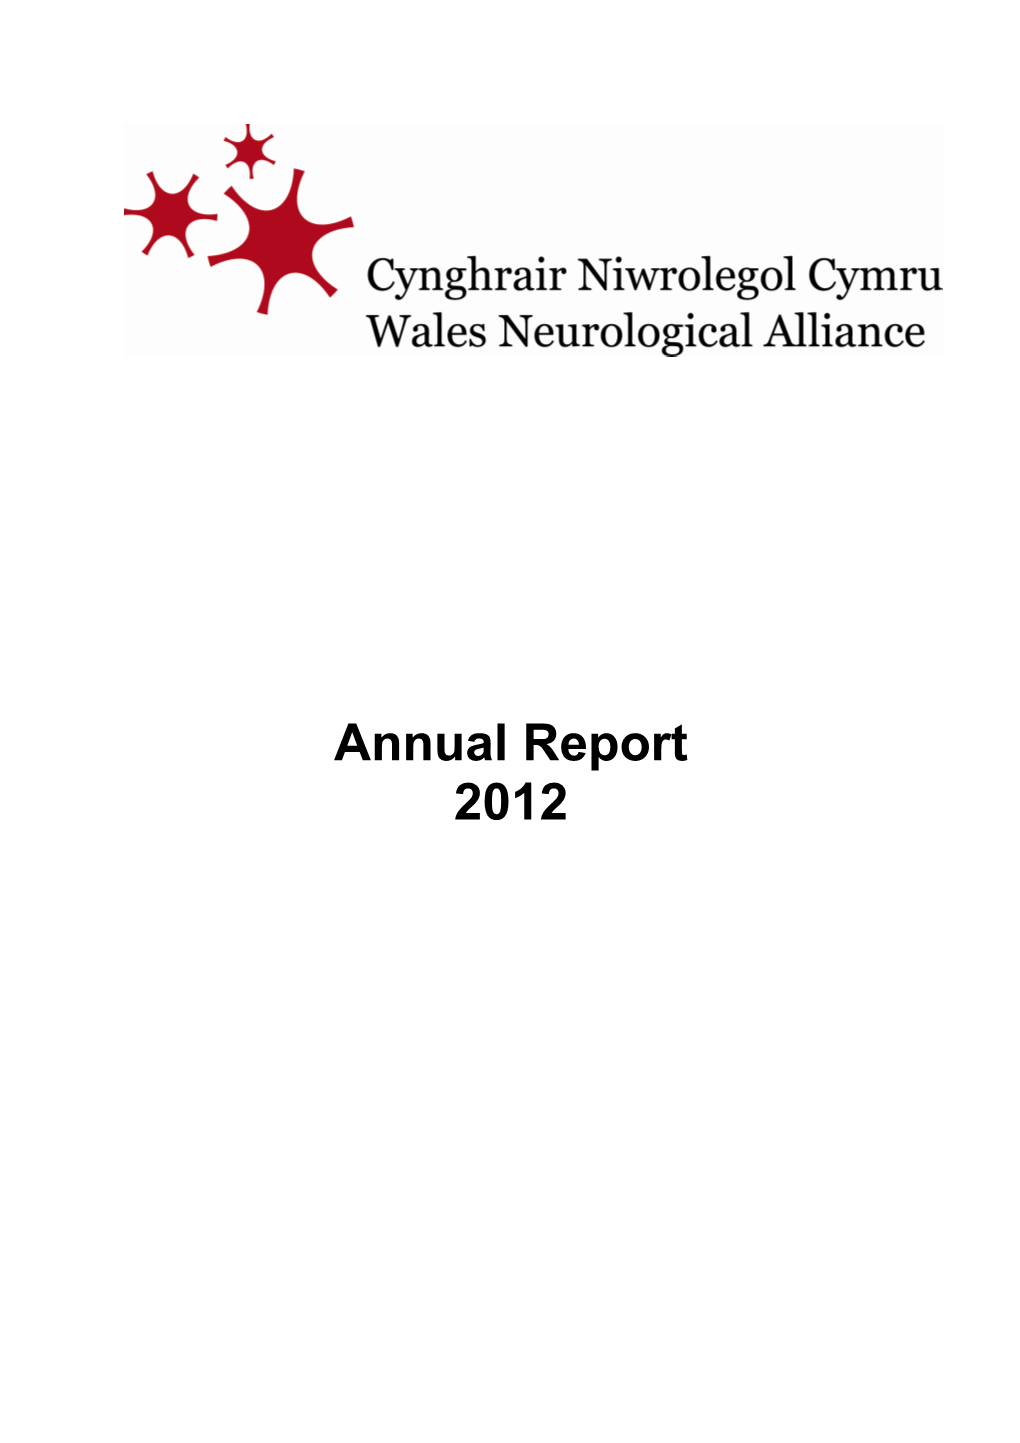 The Wales Neurological Alliance Membership